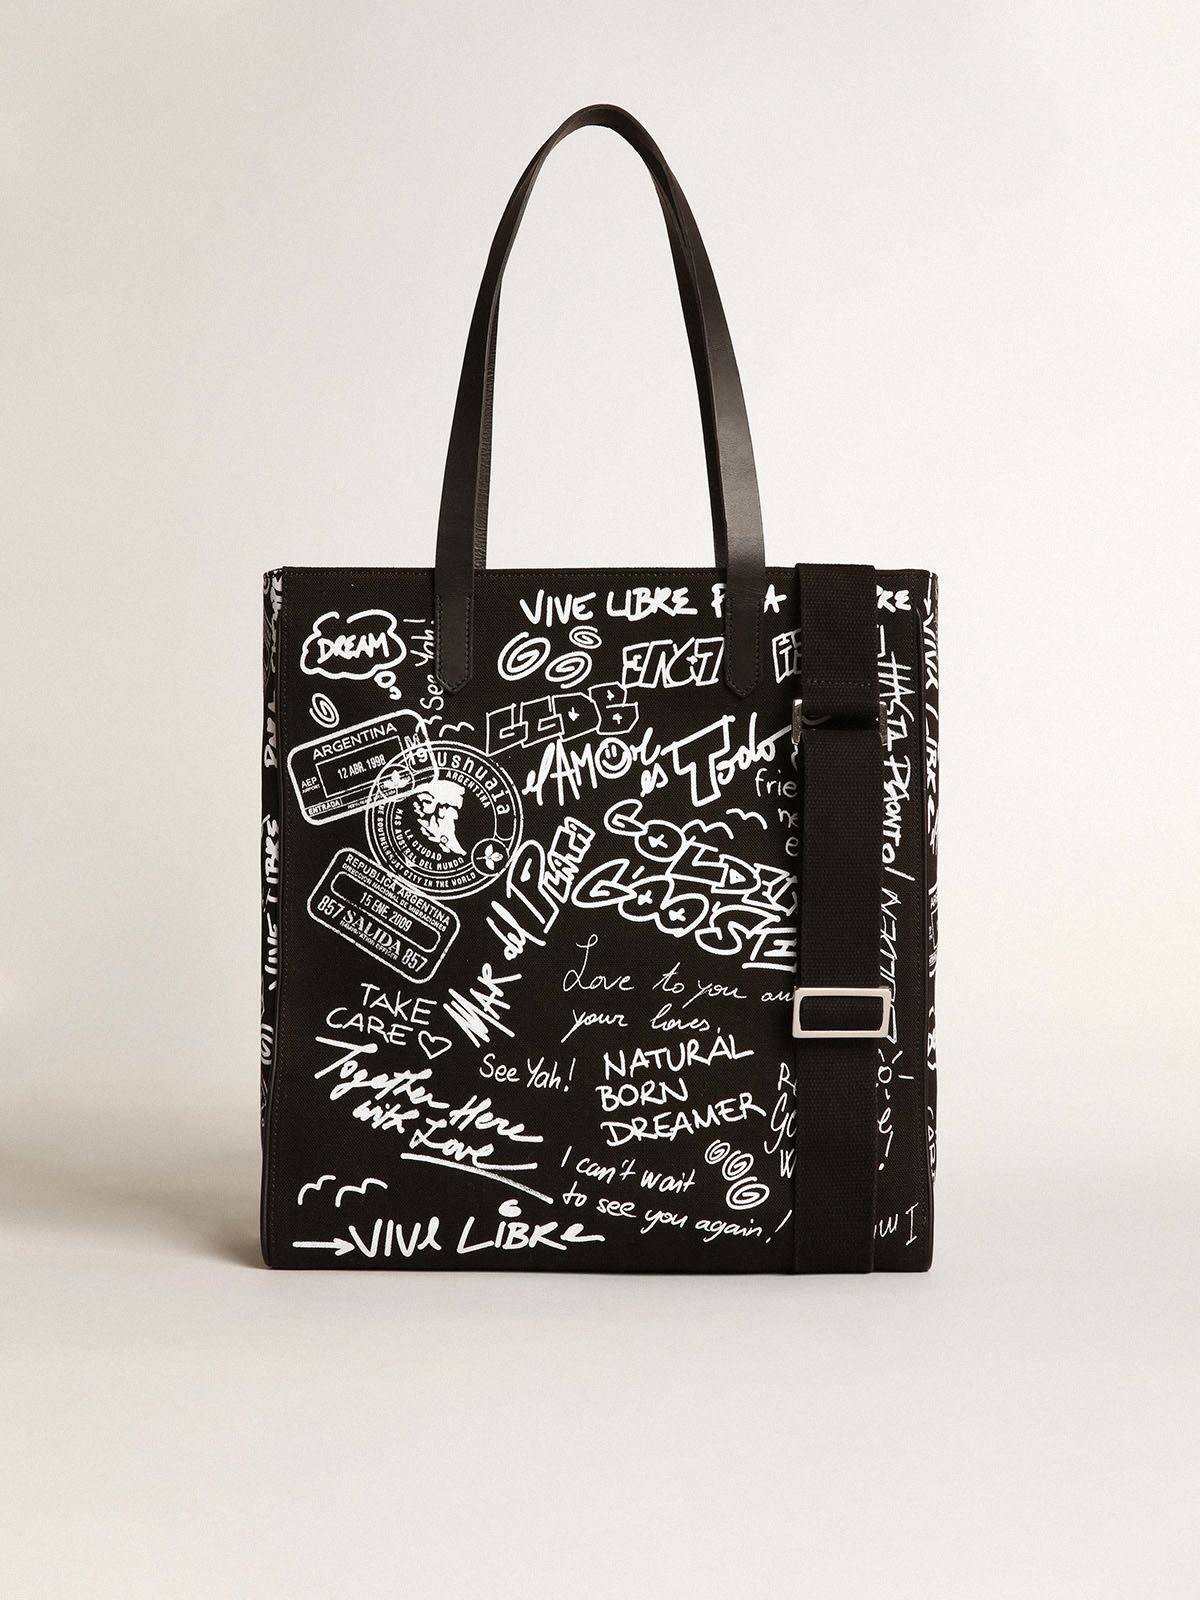 Golden Goose - Sac California Bag North-South noir avec imprimé graffiti blanc contrasté in 